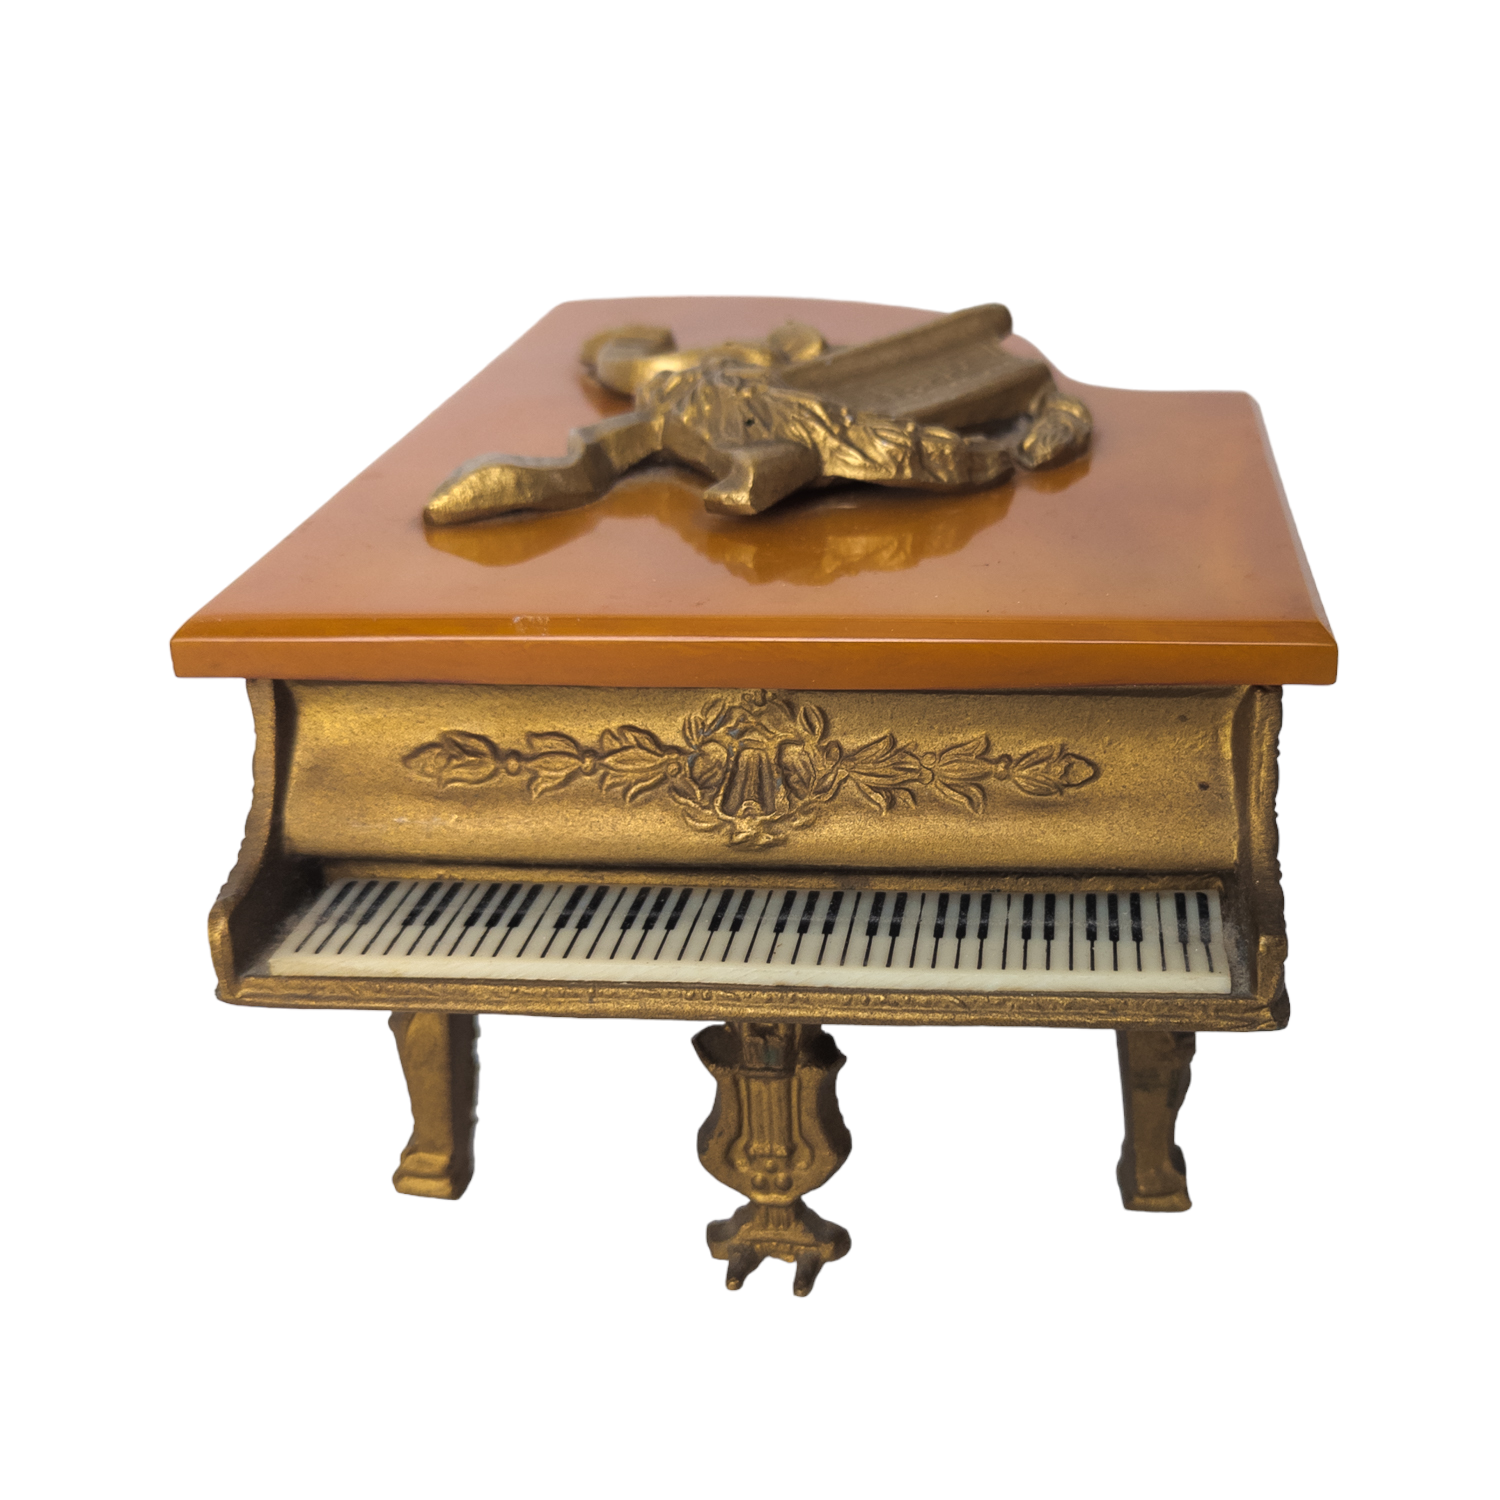 Vintage Piano Music Box With Bakelite Lid